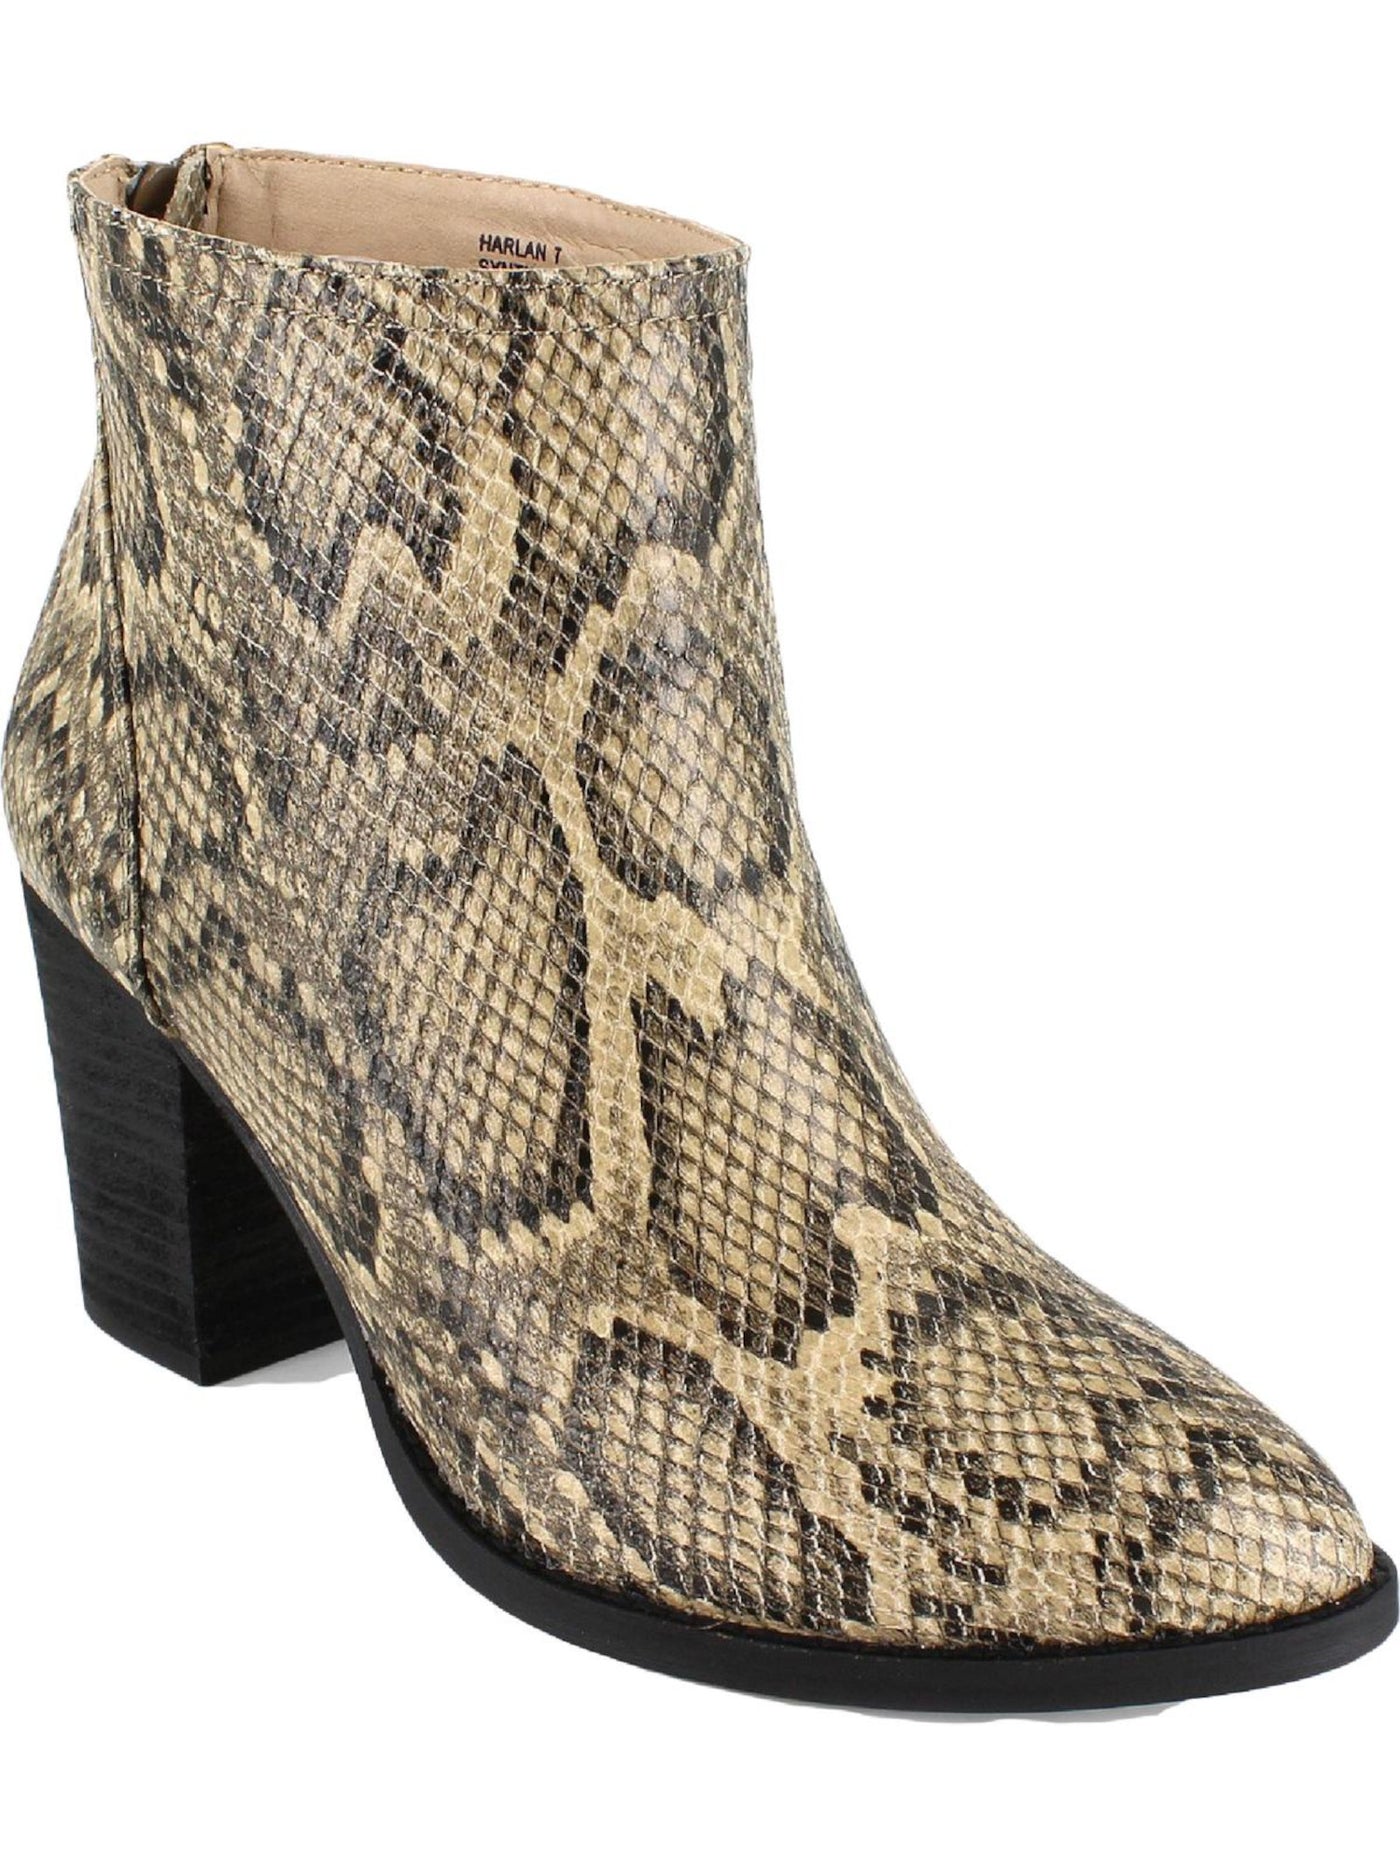 ZIGI SOHO Womens Beige Snake Skin Harlan Almond Toe Block Heel Zip-Up Boots Shoes 8.5 M